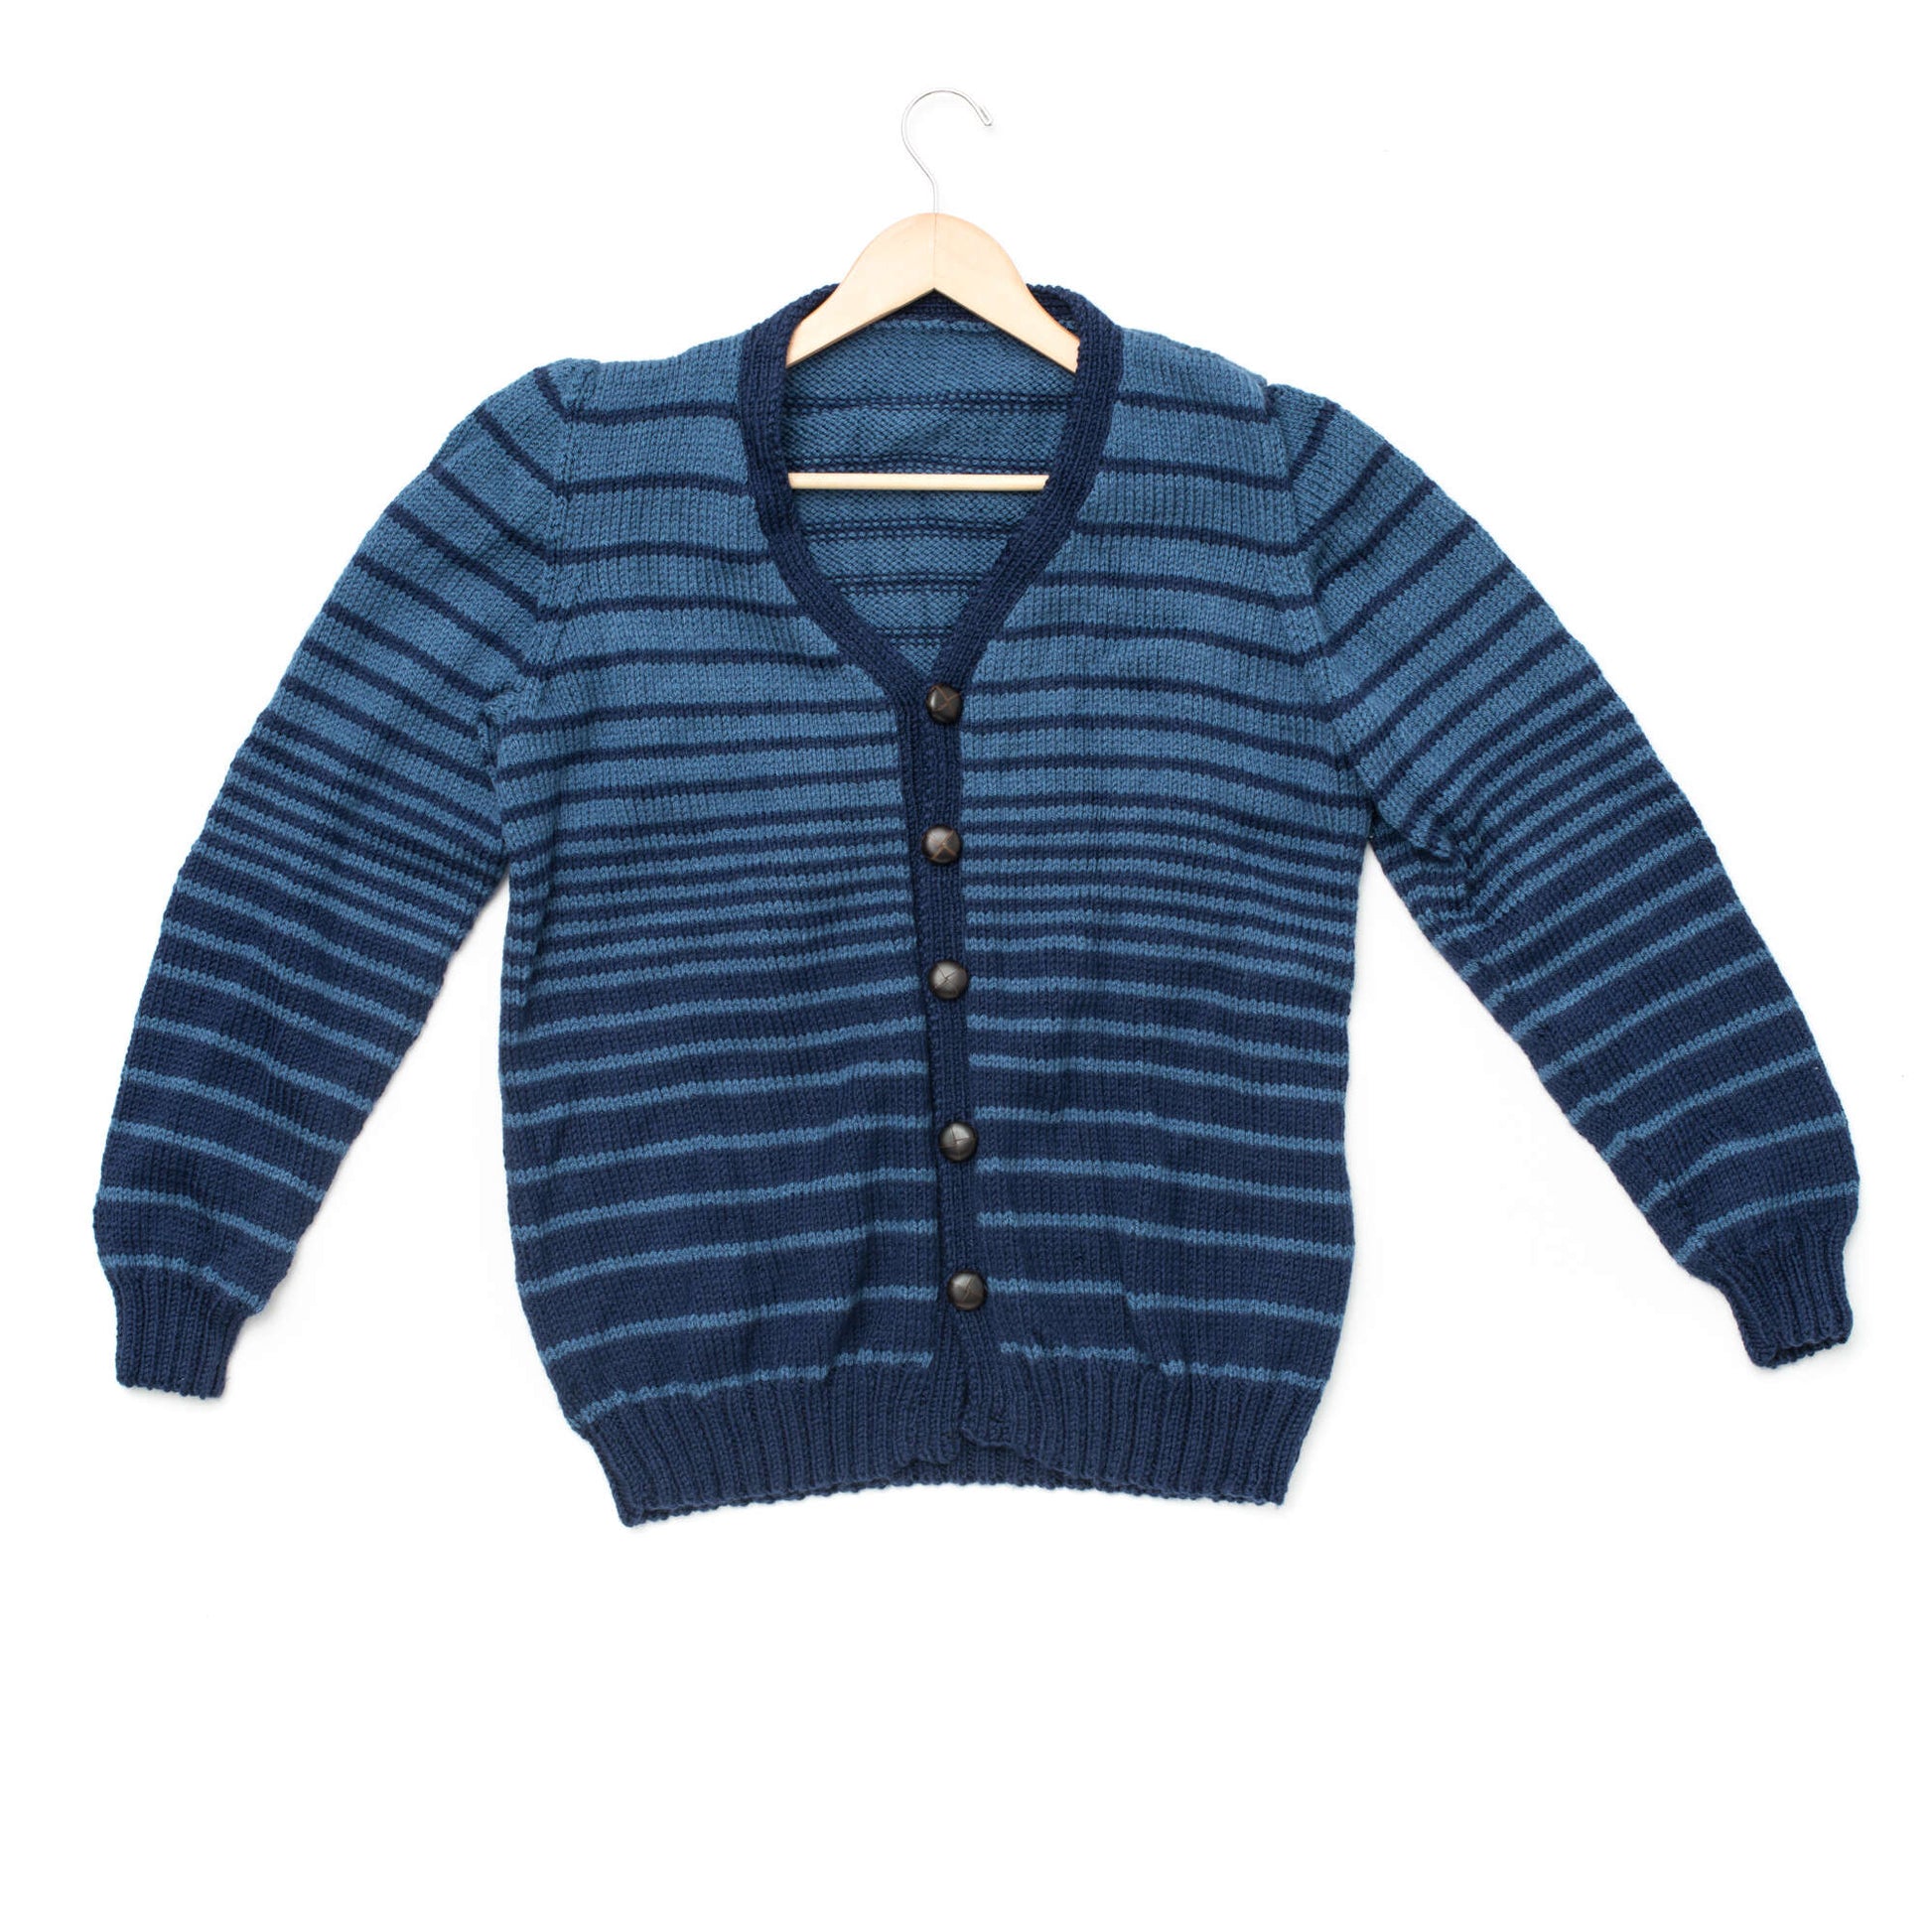 Free Patons Transitions Knit Cardigan Pattern